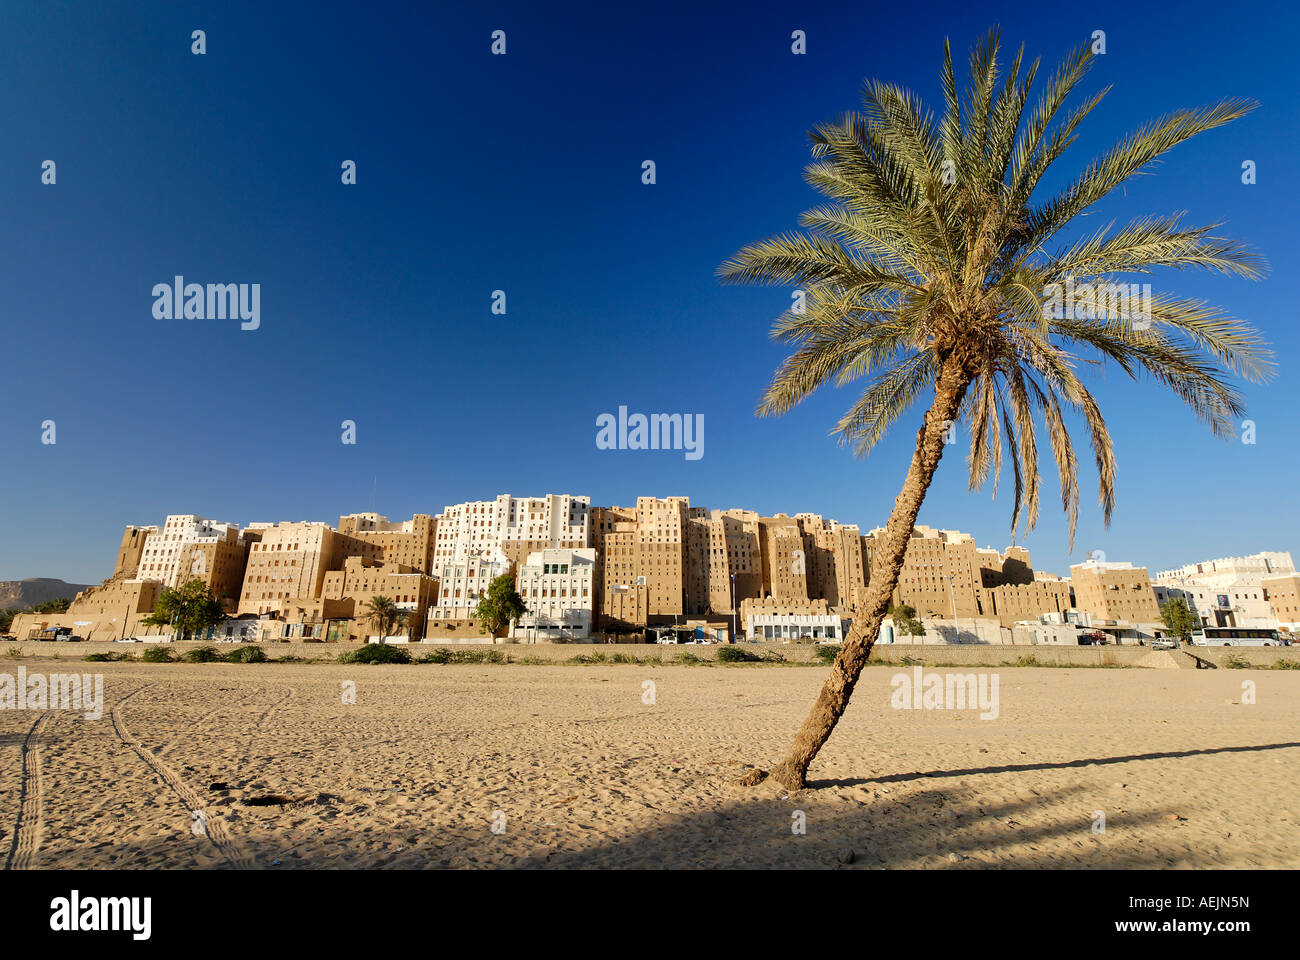 View of the old town of Shibam, Wadi Hadramaut, Unesco World Heritage Site, Yemen Stock Photo